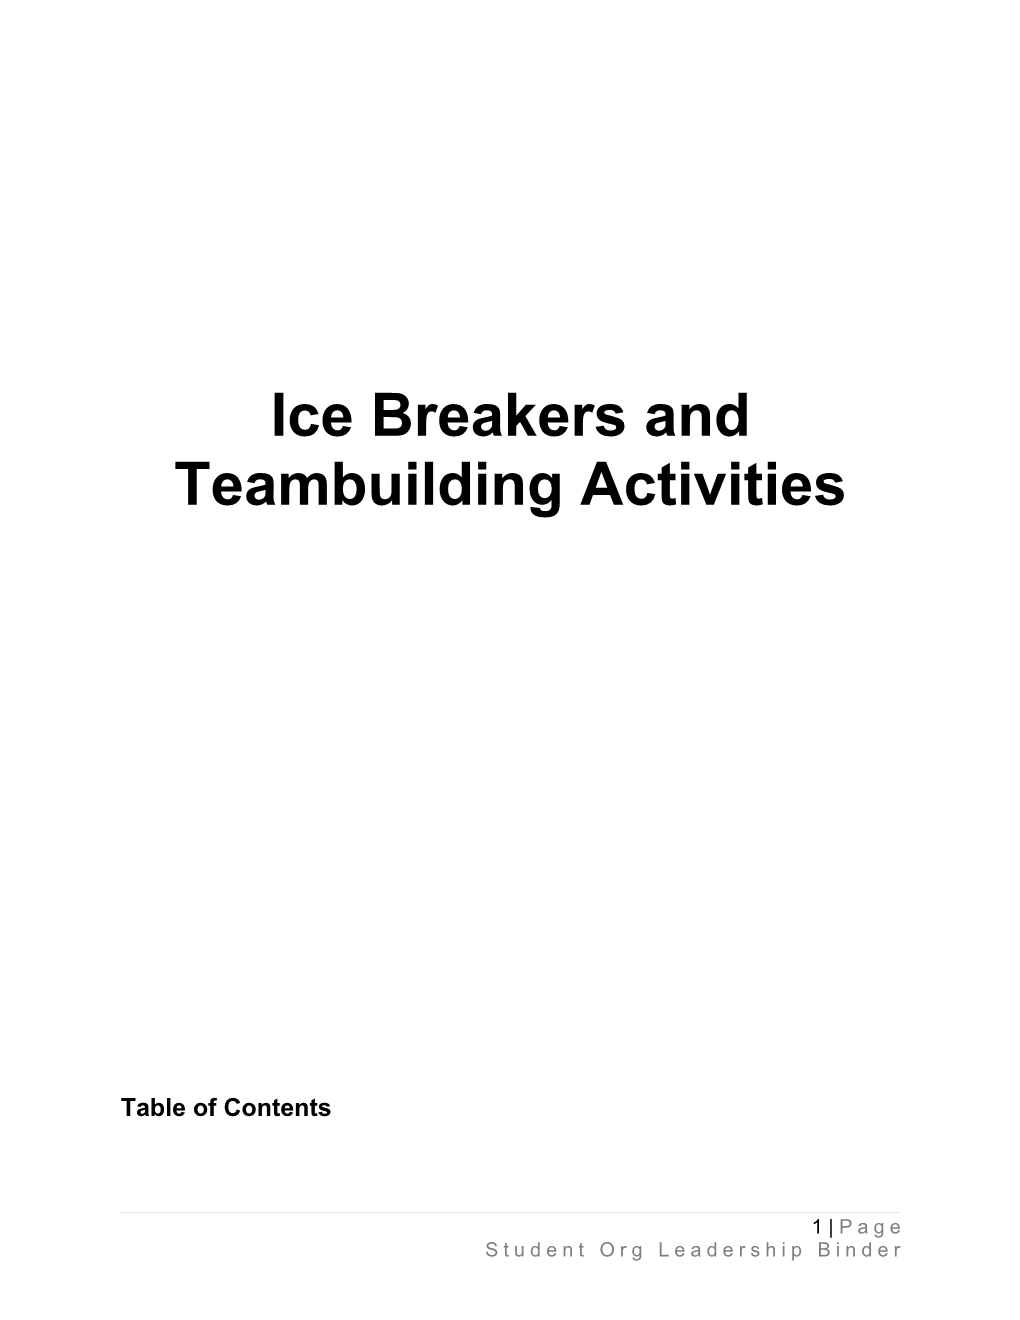 Ice Breakers and Teambuilding Activities